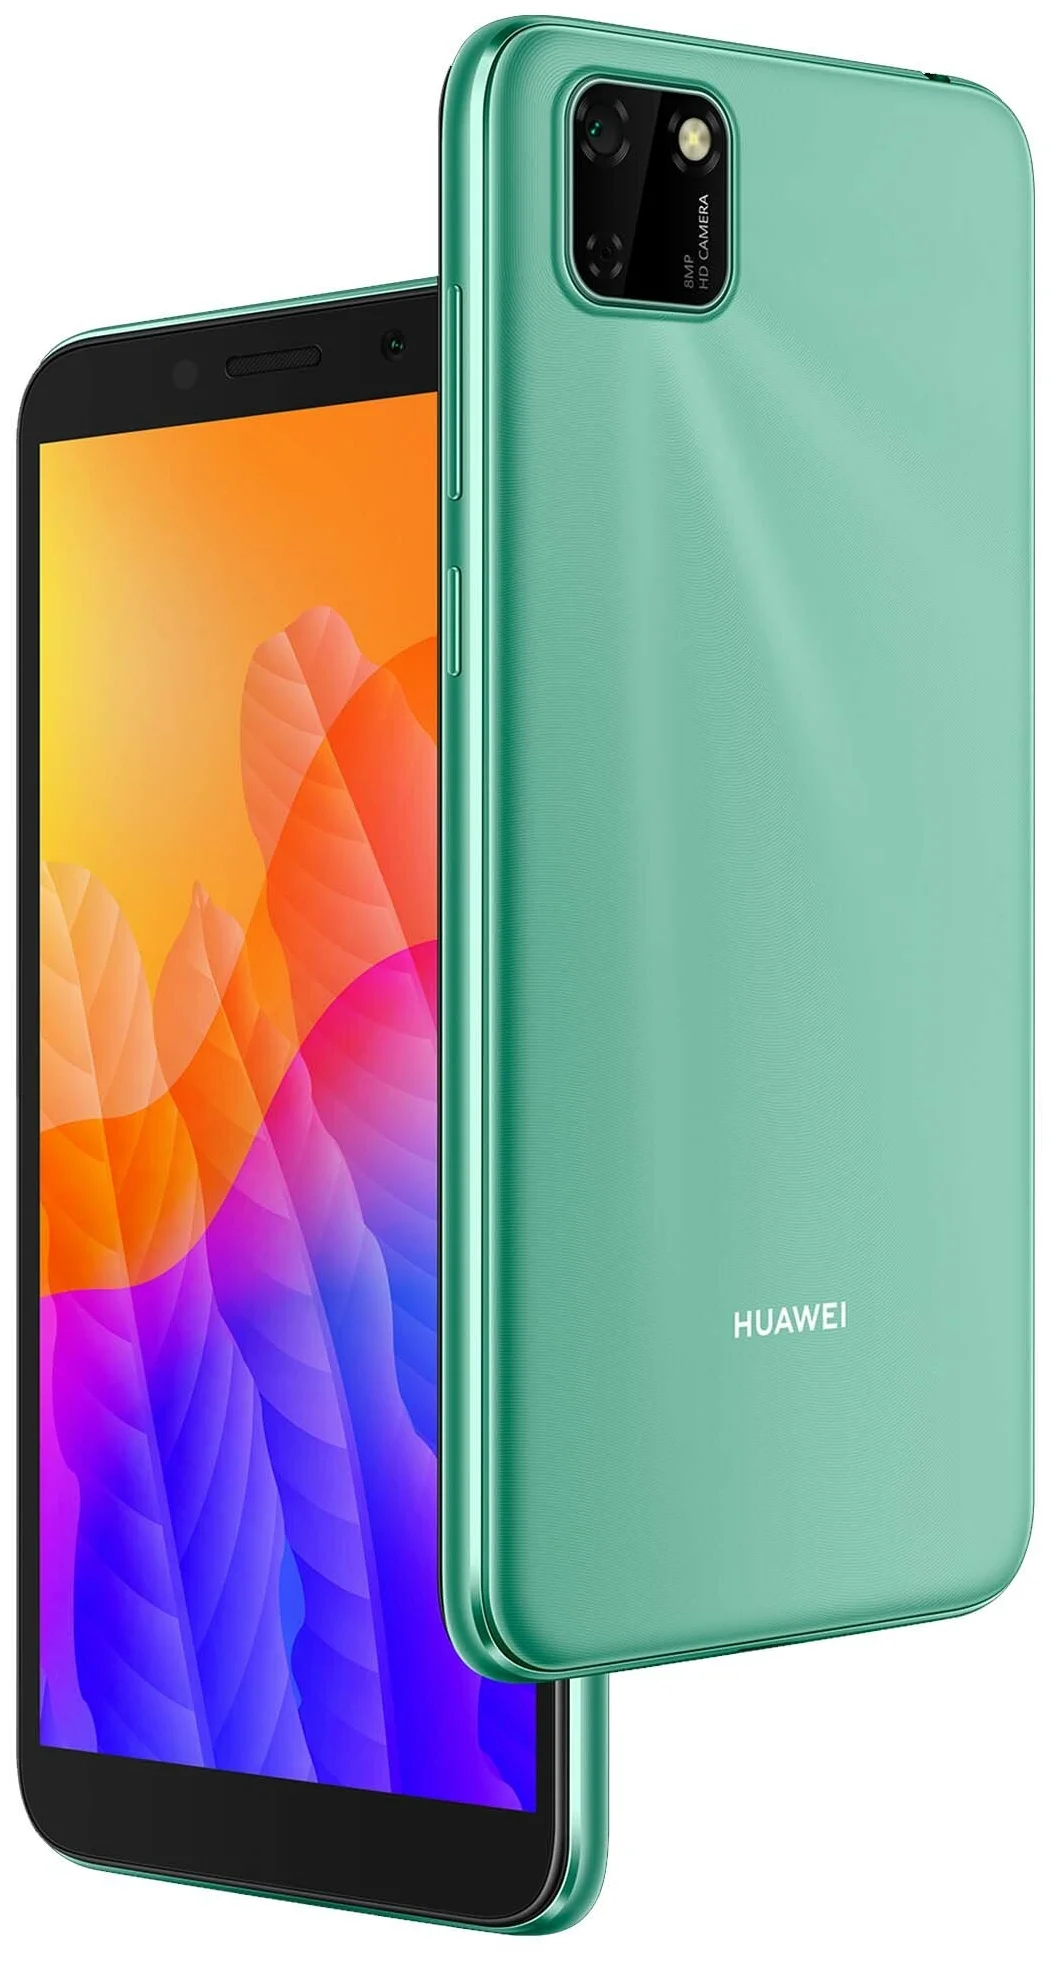 HUAWEI Y5p - операционная система: Android 10